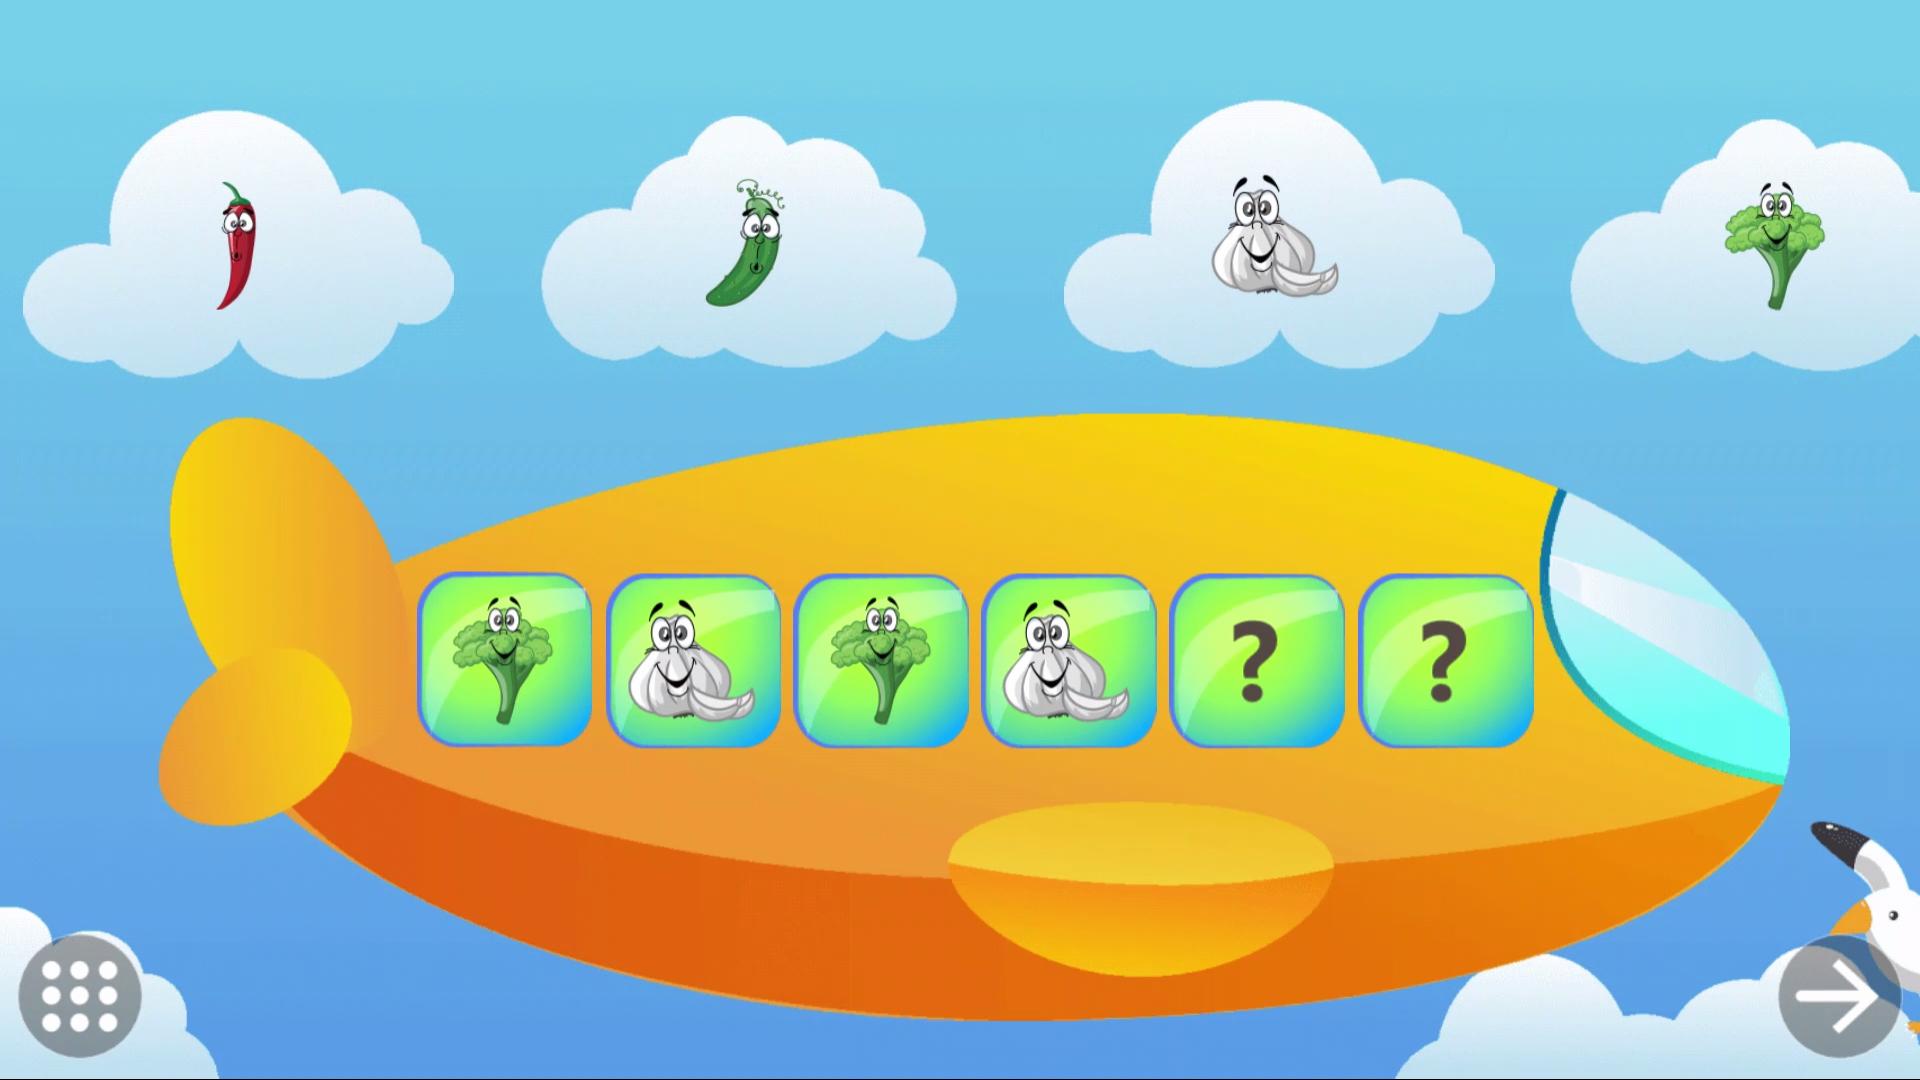 Kids Fun Learning - Educational Cool Math Games 1.0.2.0 Screenshot 18